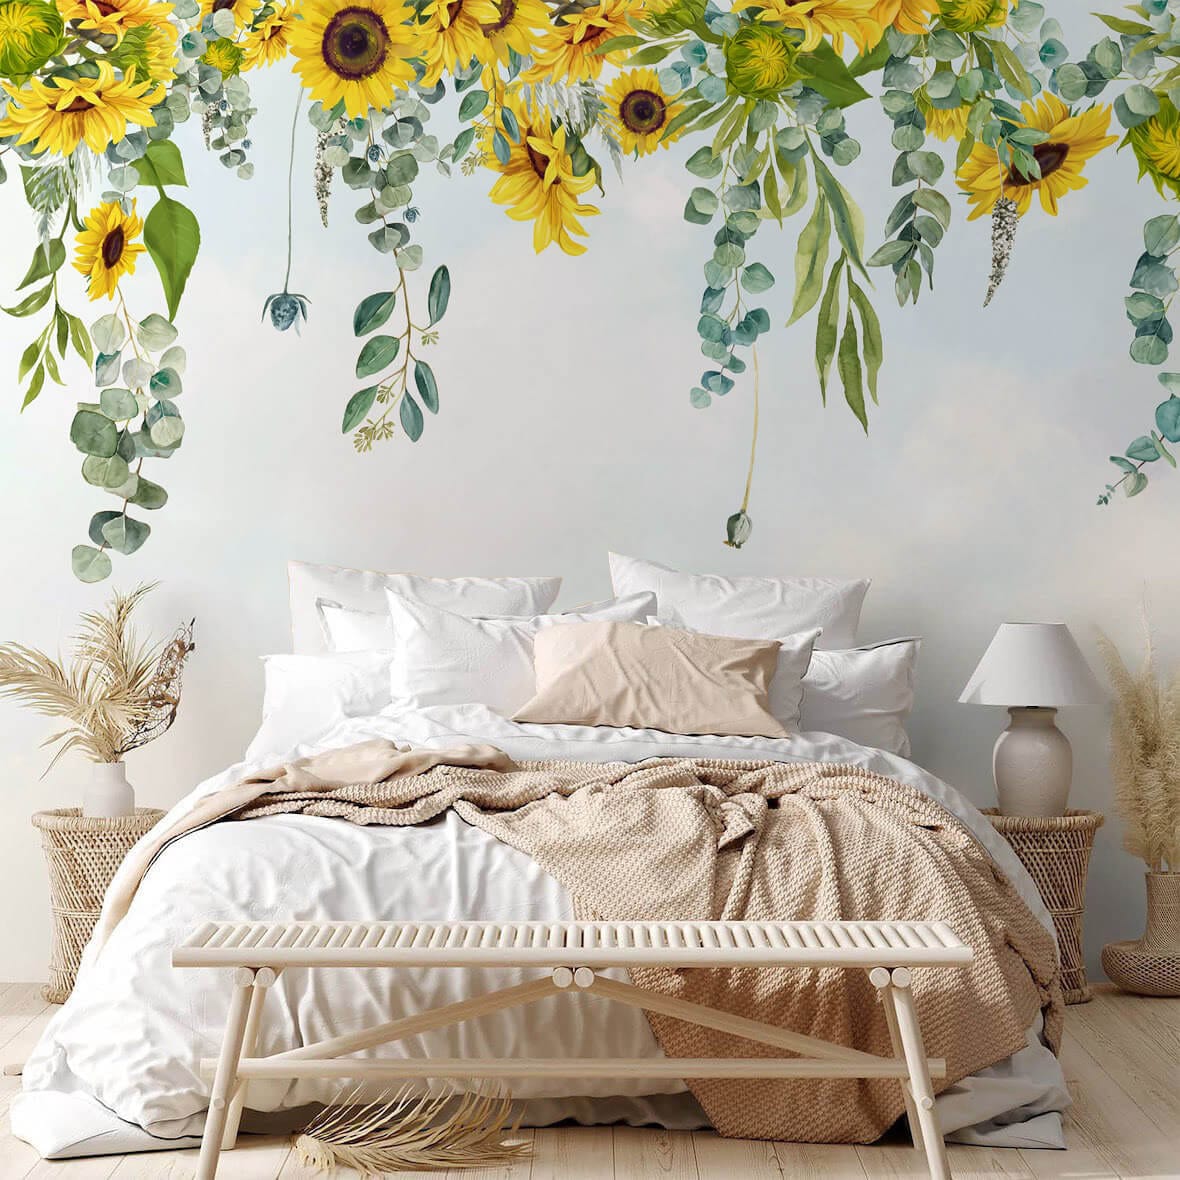 blue sky and yellow sunflower mural art bedroom